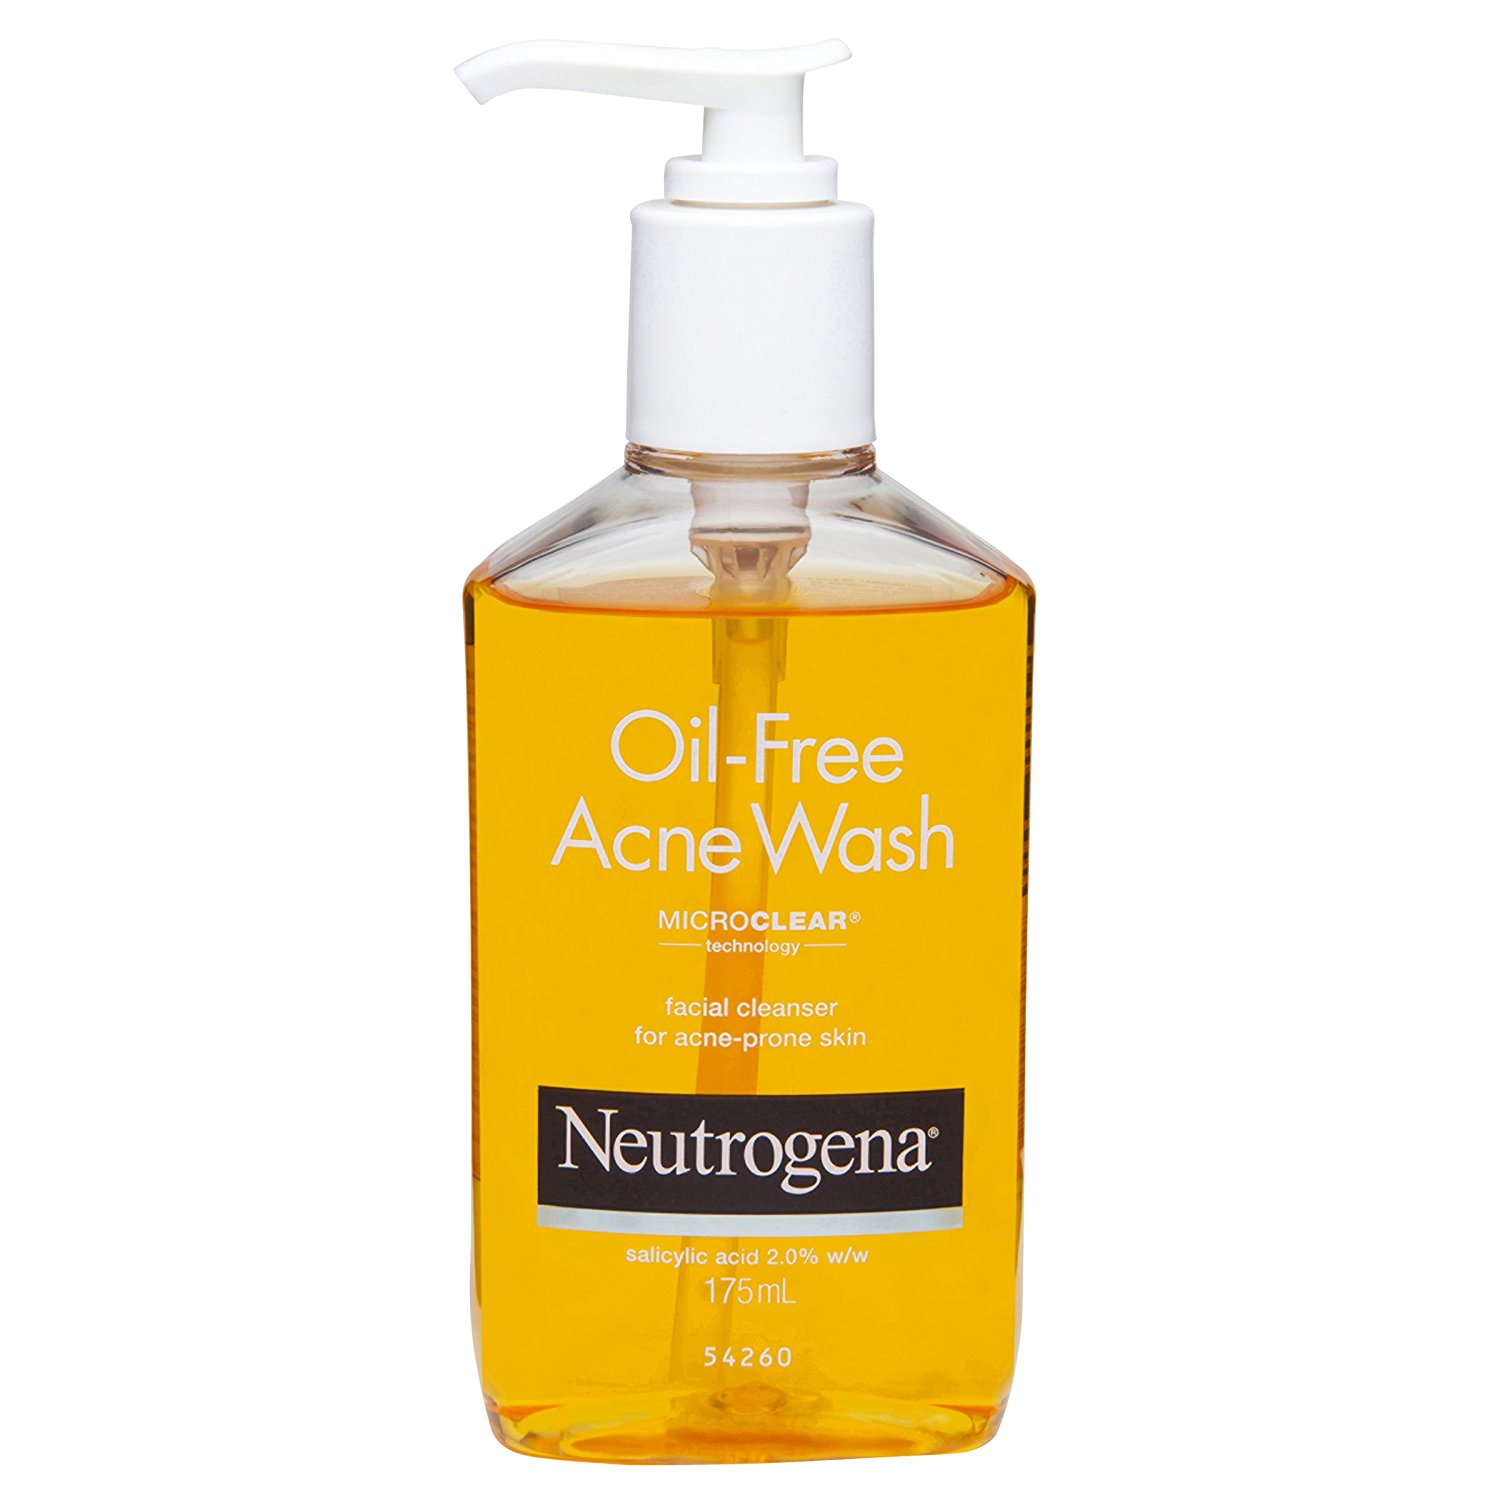 Neutrogena Oil-Free Acne Wash (Face Wash with Salicylic Acid), 175ml ...